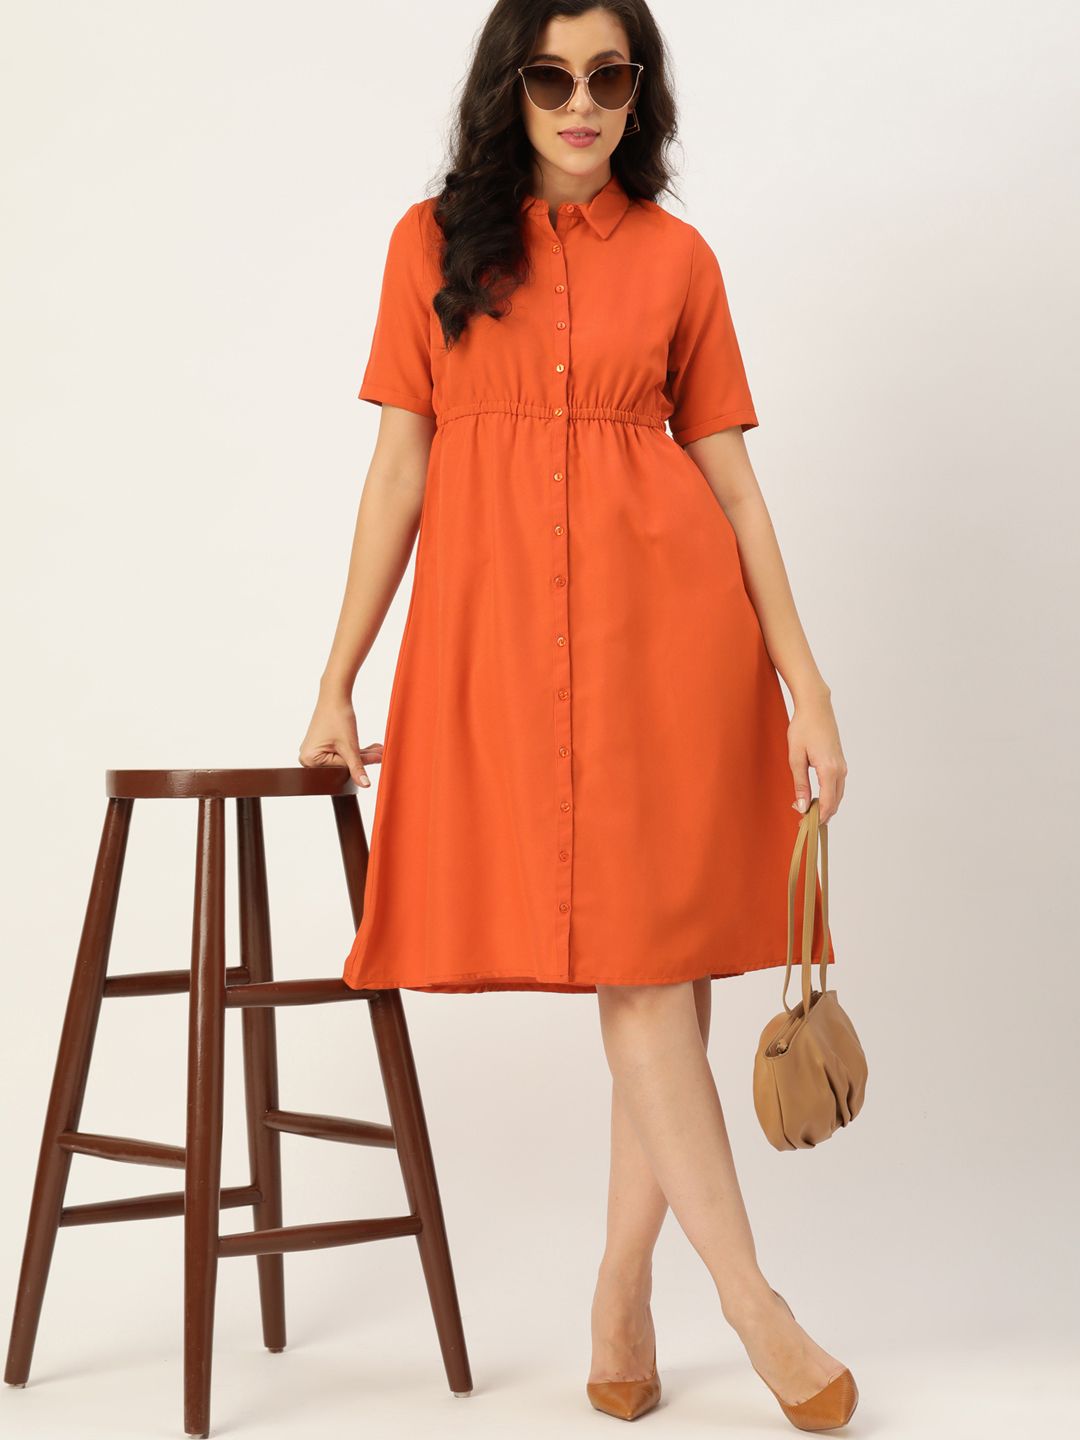 DressBerry Rust Orange A-Line Dress Price in India